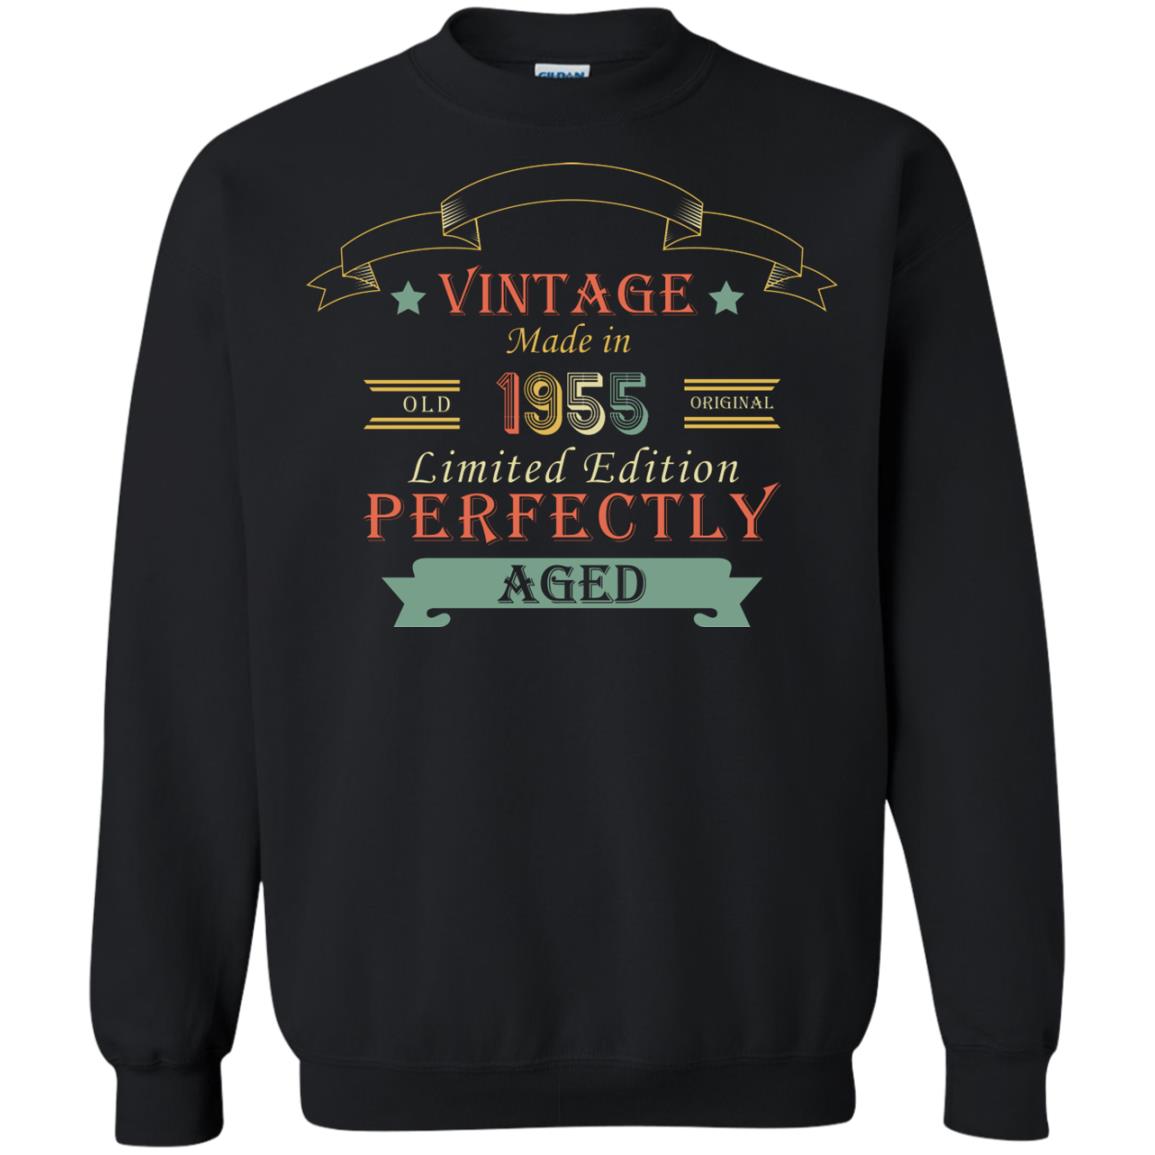 Vintage Made In Old 1955 Original Limited Edition Perfectly Aged 63th Birthday T-shirtG180 Gildan Crewneck Pullover Sweatshirt 8 oz.